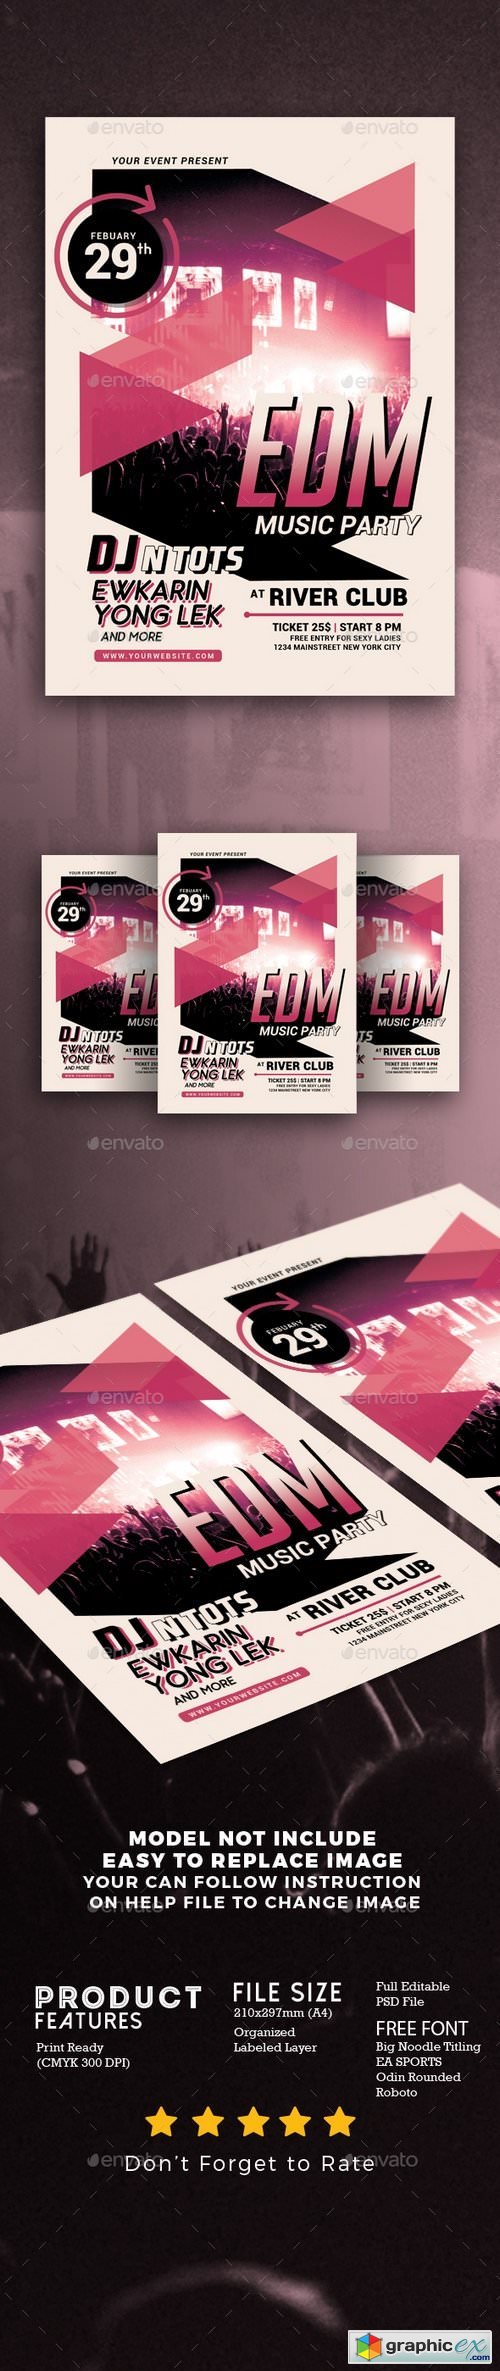 EDM Music Party Flyer